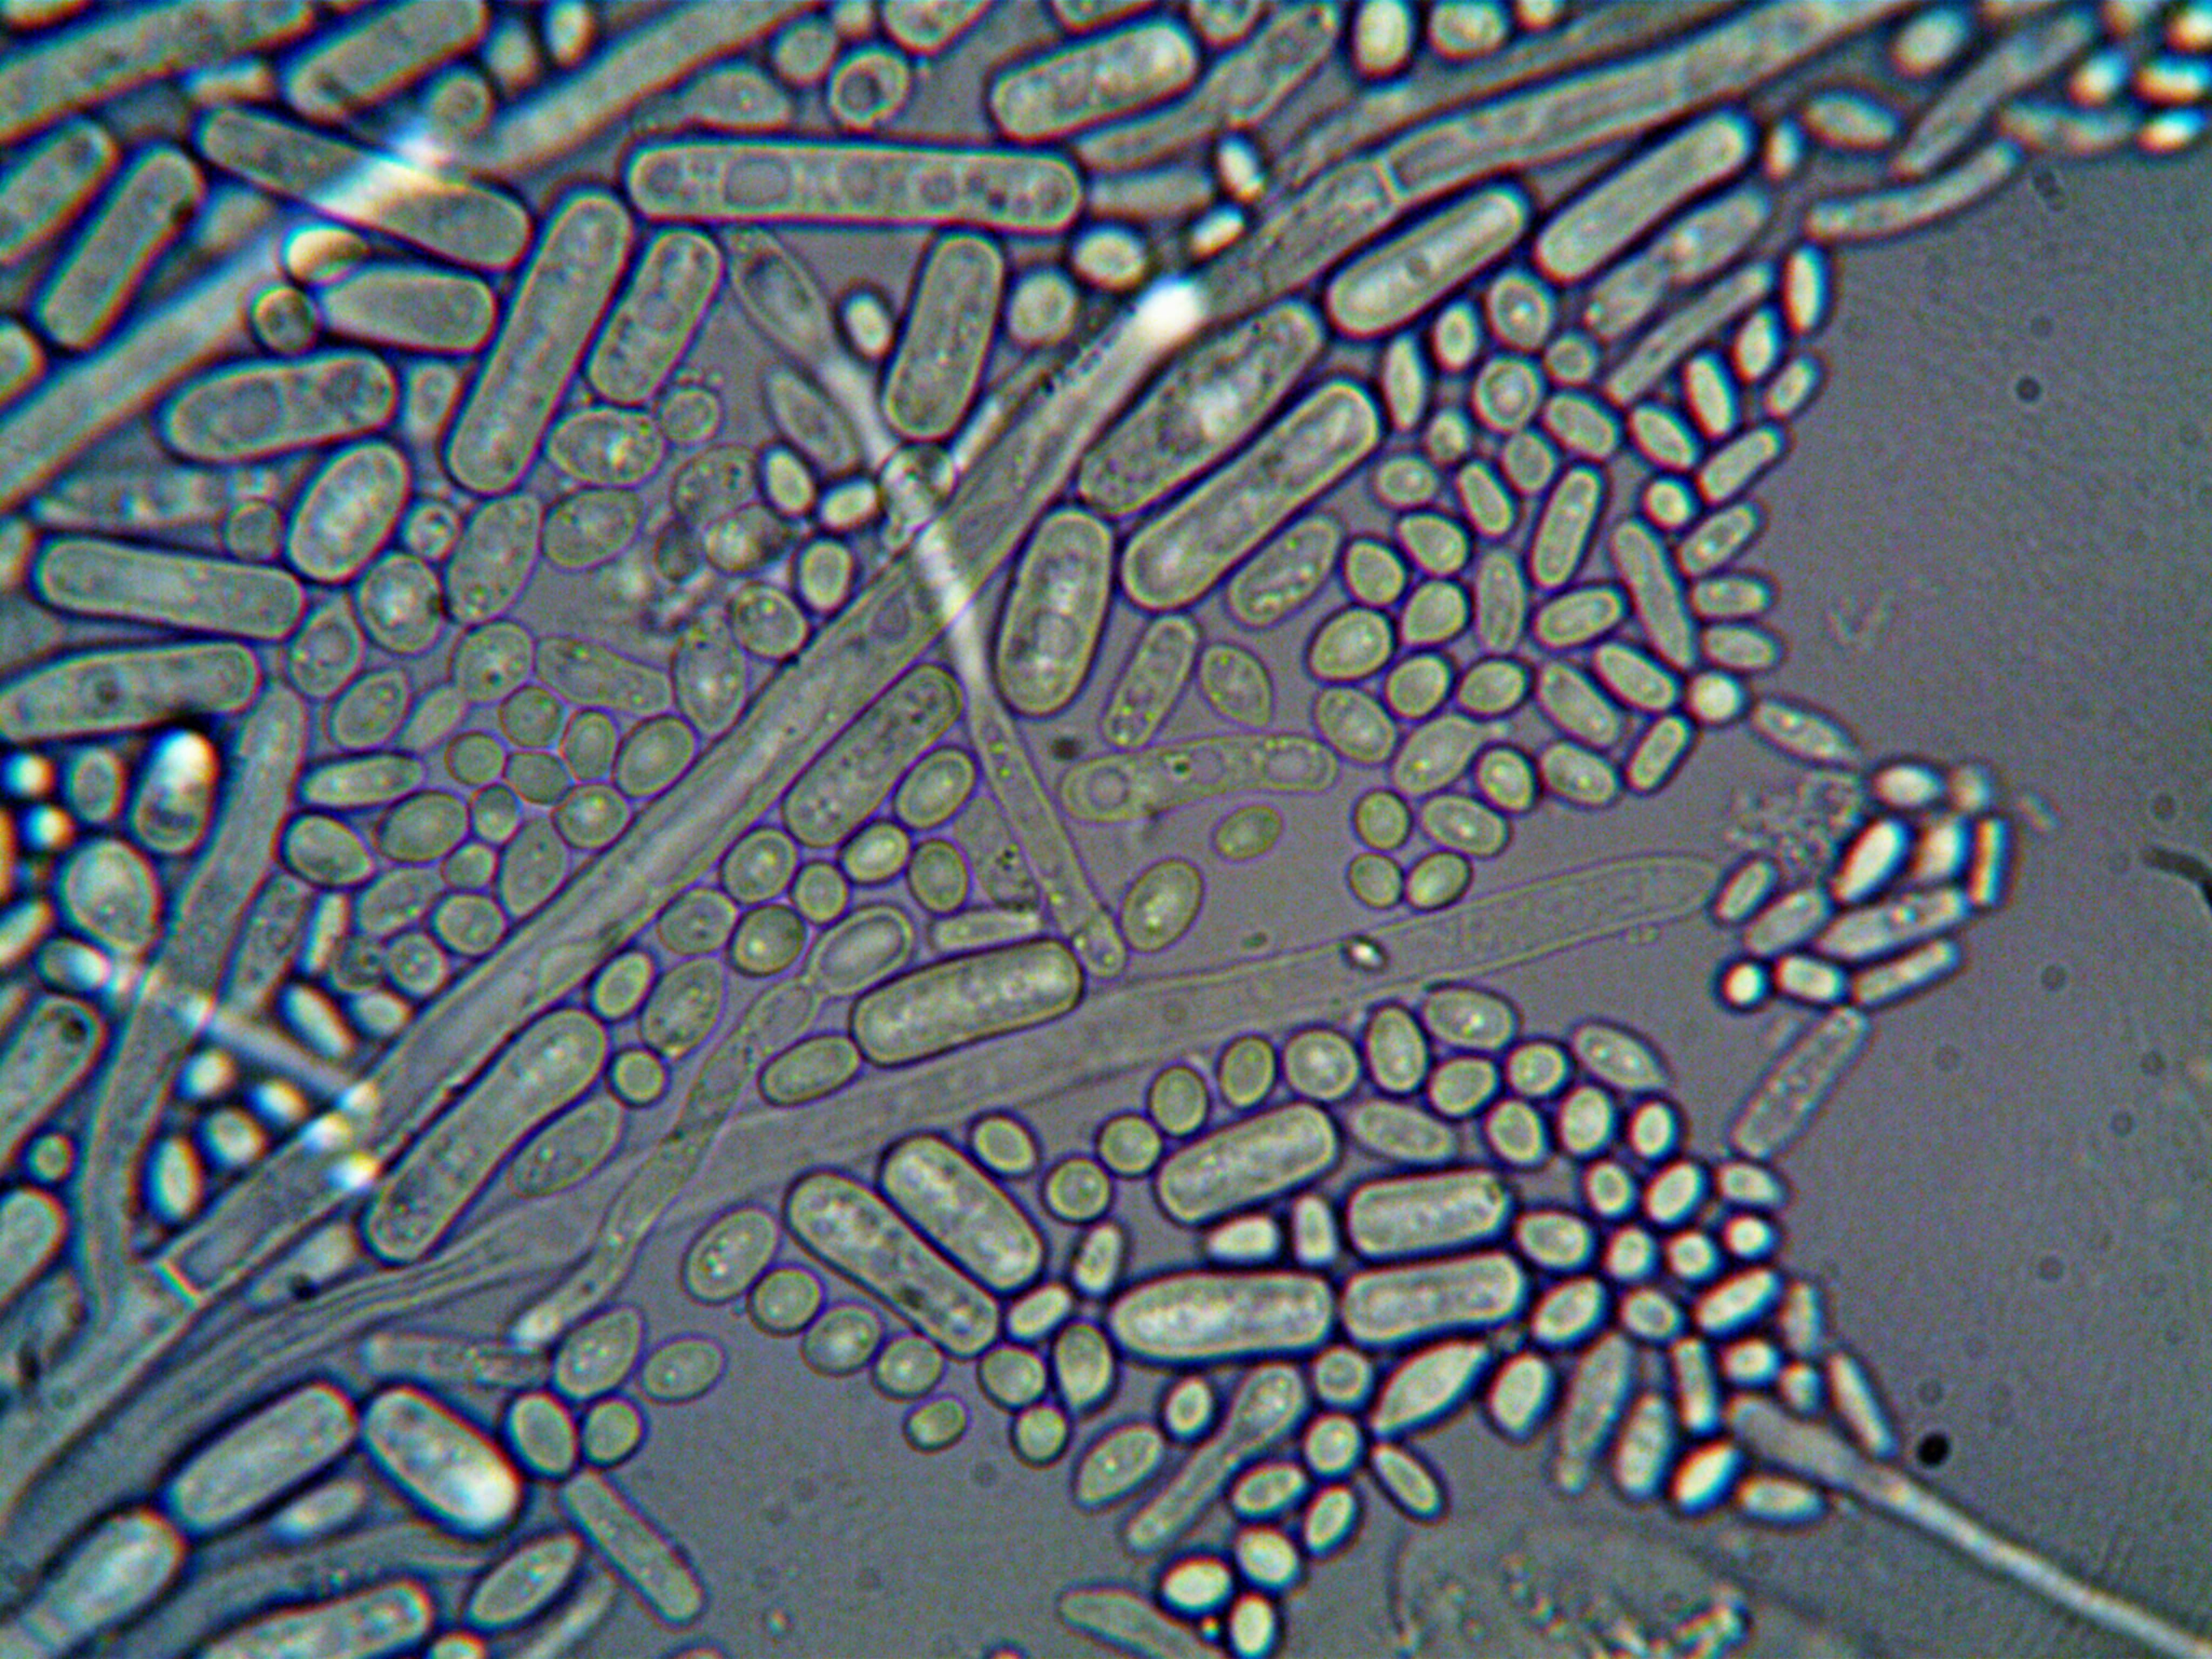 133160 Microorganisms Images Stock Photos  Vectors  Shutterstock